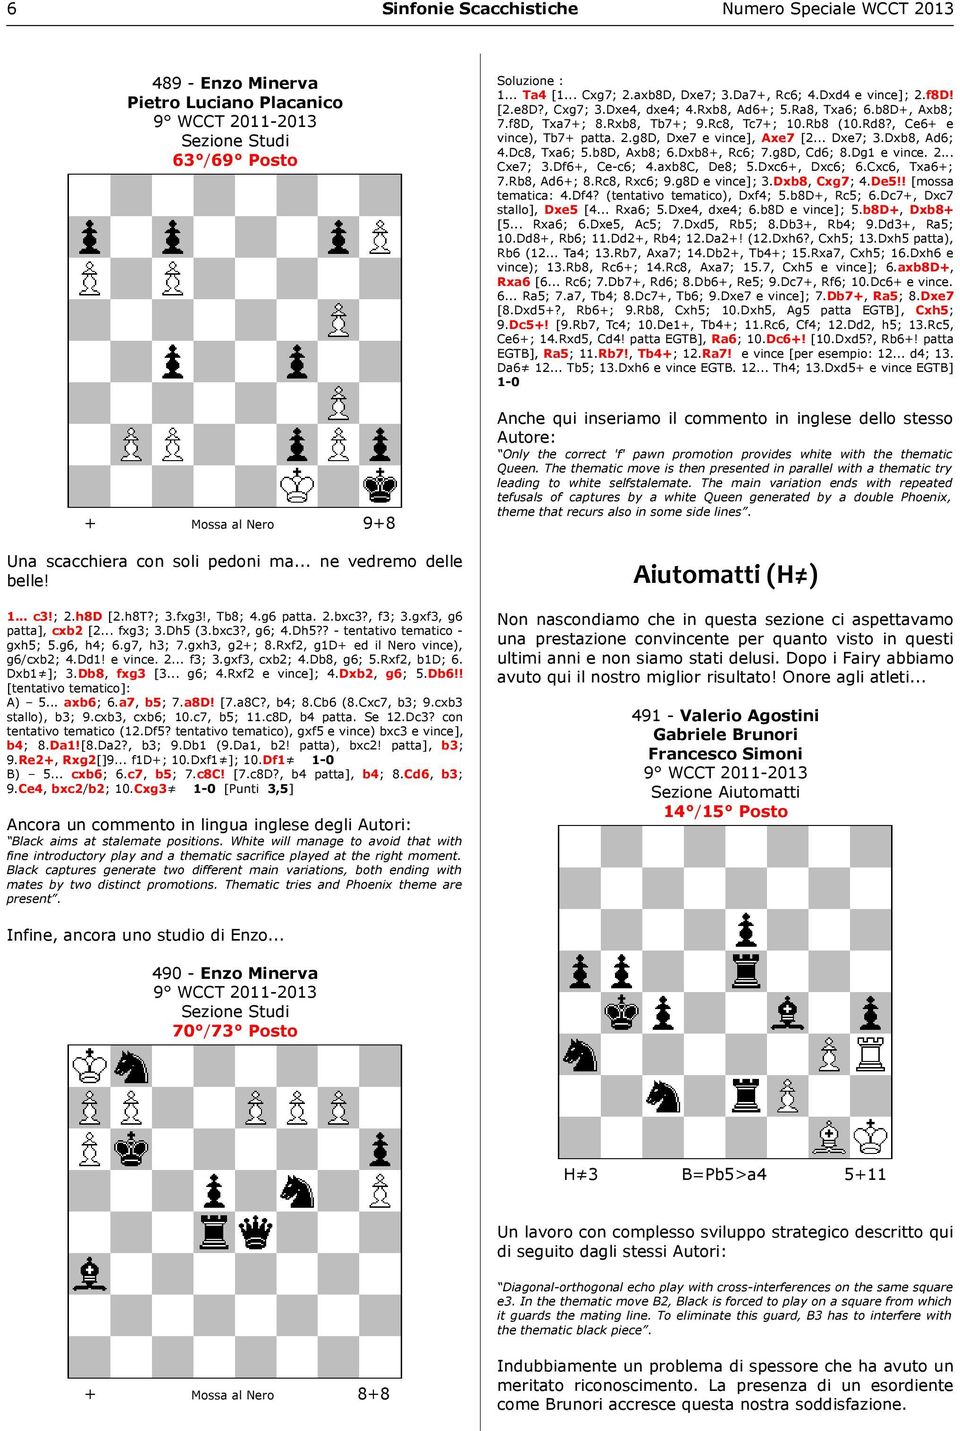 Rxf2, g1d+ ed il Nero vince), g6/cxb2; 4.Dd1! e vince. 2... f3; 3.gxf3, cxb2; 4.Db8, g6; 5.Rxf2, b1d; 6. Dxb1 ]; 3.Db8, fxg3 [3... g6; 4.Rxf2 e vince]; 4.Dxb2, g6; 5.Db6!! [tentativo tematico]: A) 5.